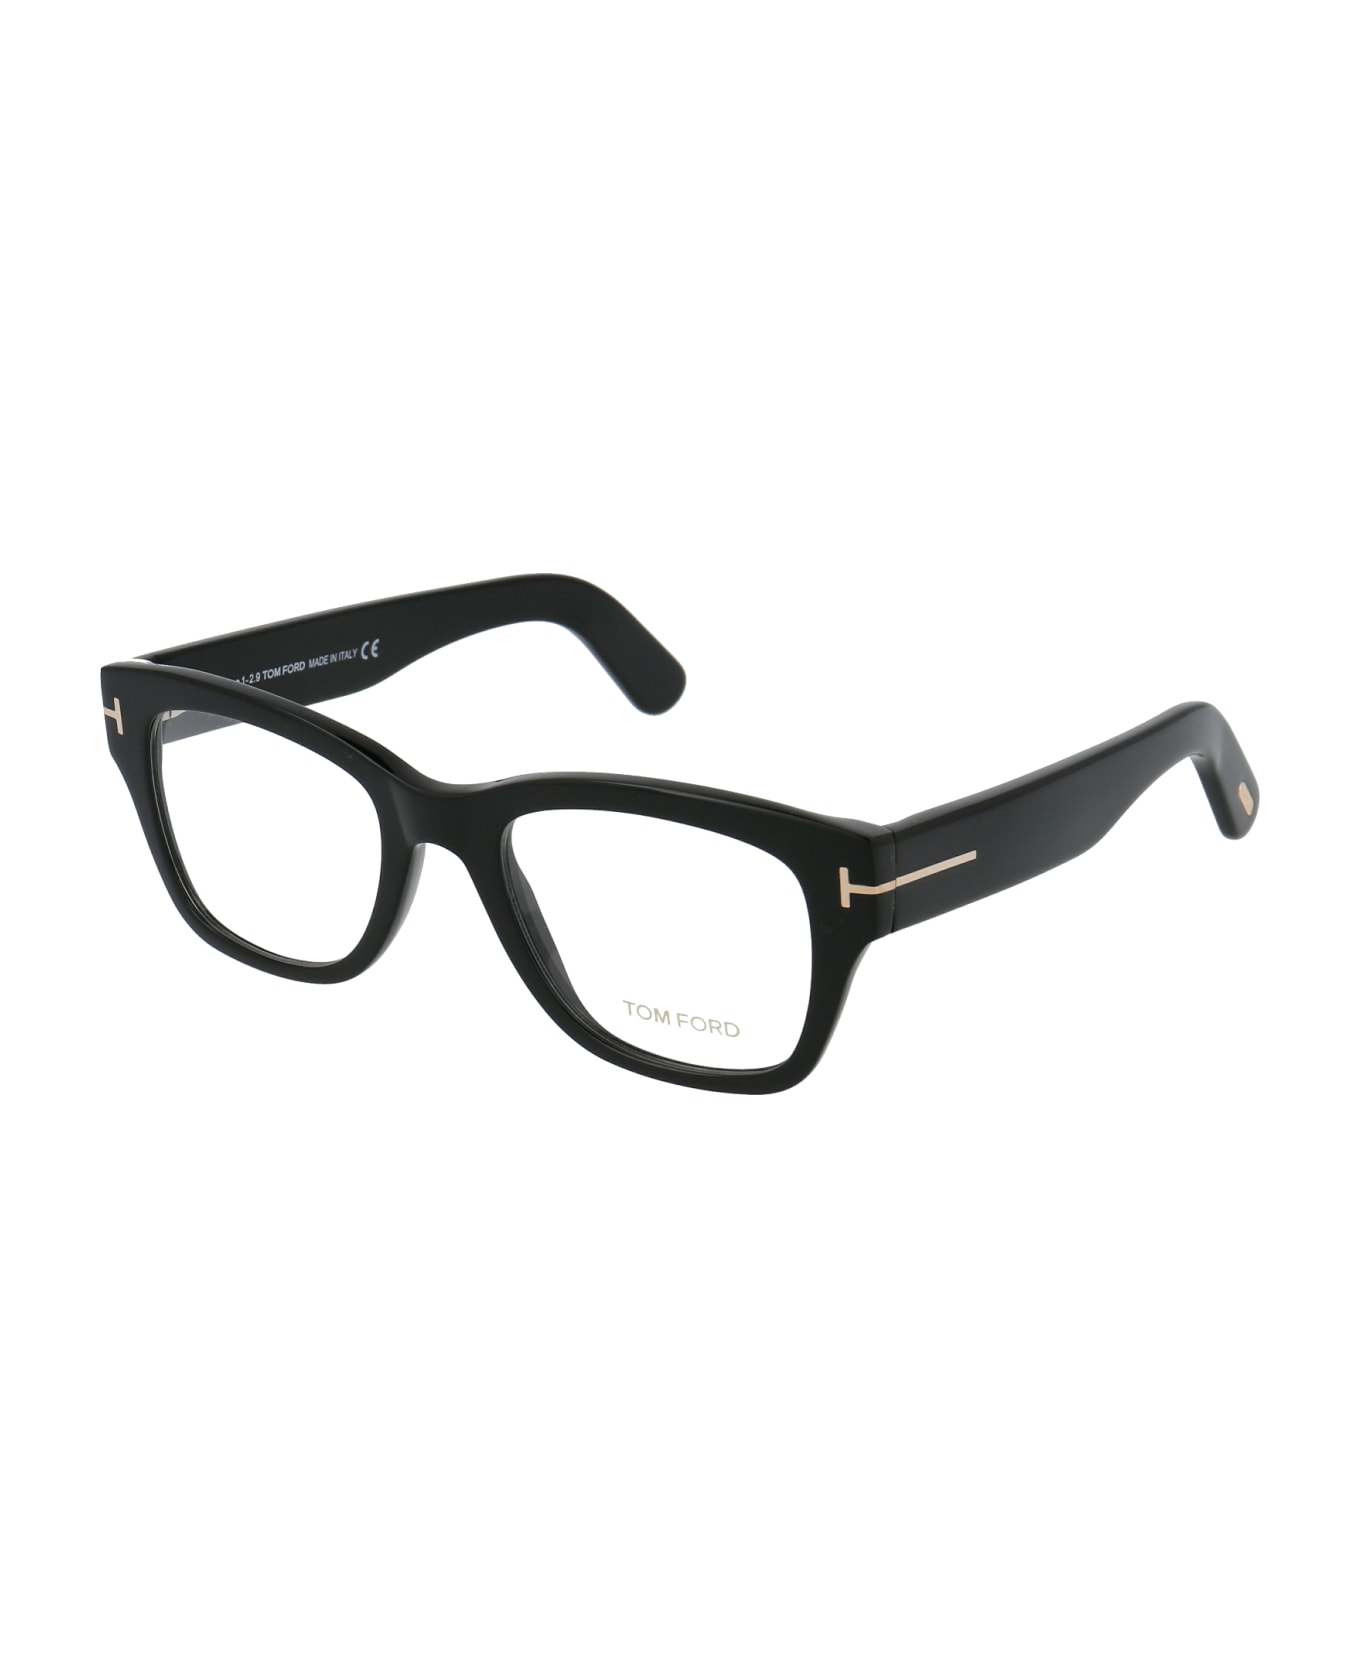 Tom Ford Eyewear Ft5379 Glasses - 001 Nero Lucido アイウェア